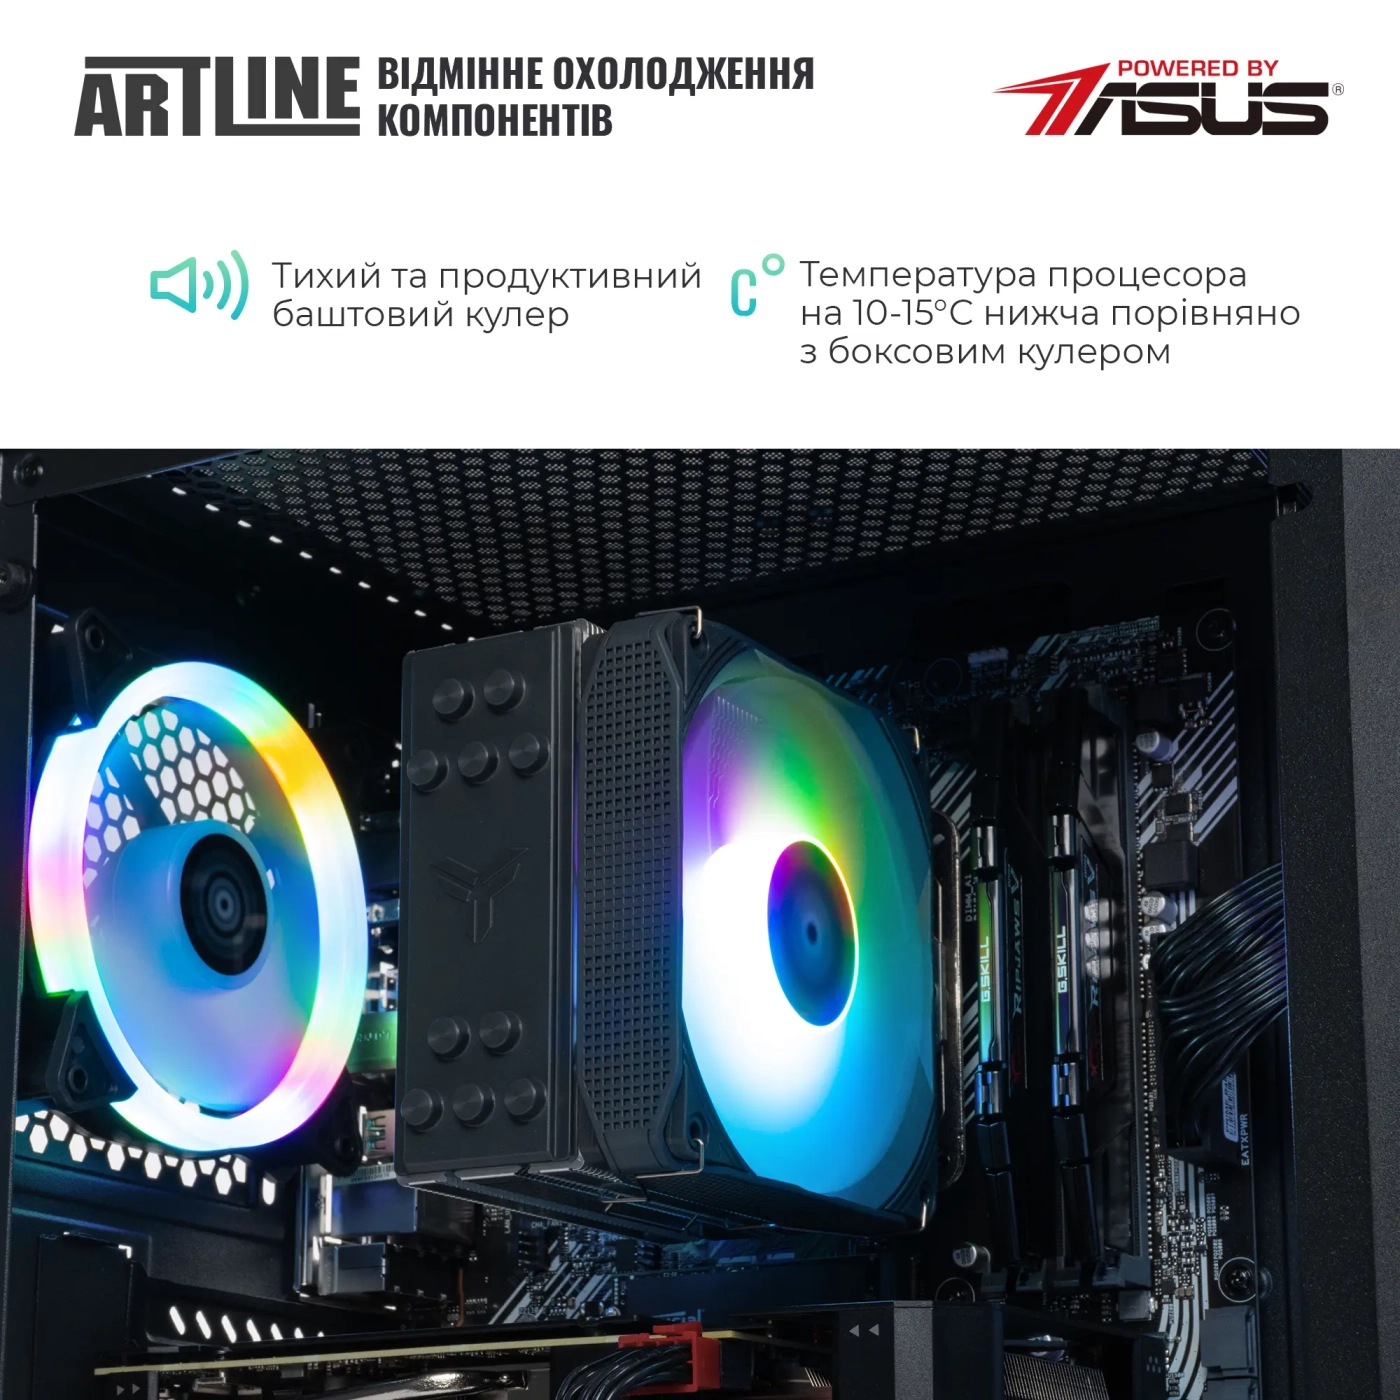 Купить Компьютер ARTLINE Gaming X35 (X35v56) - фото 5